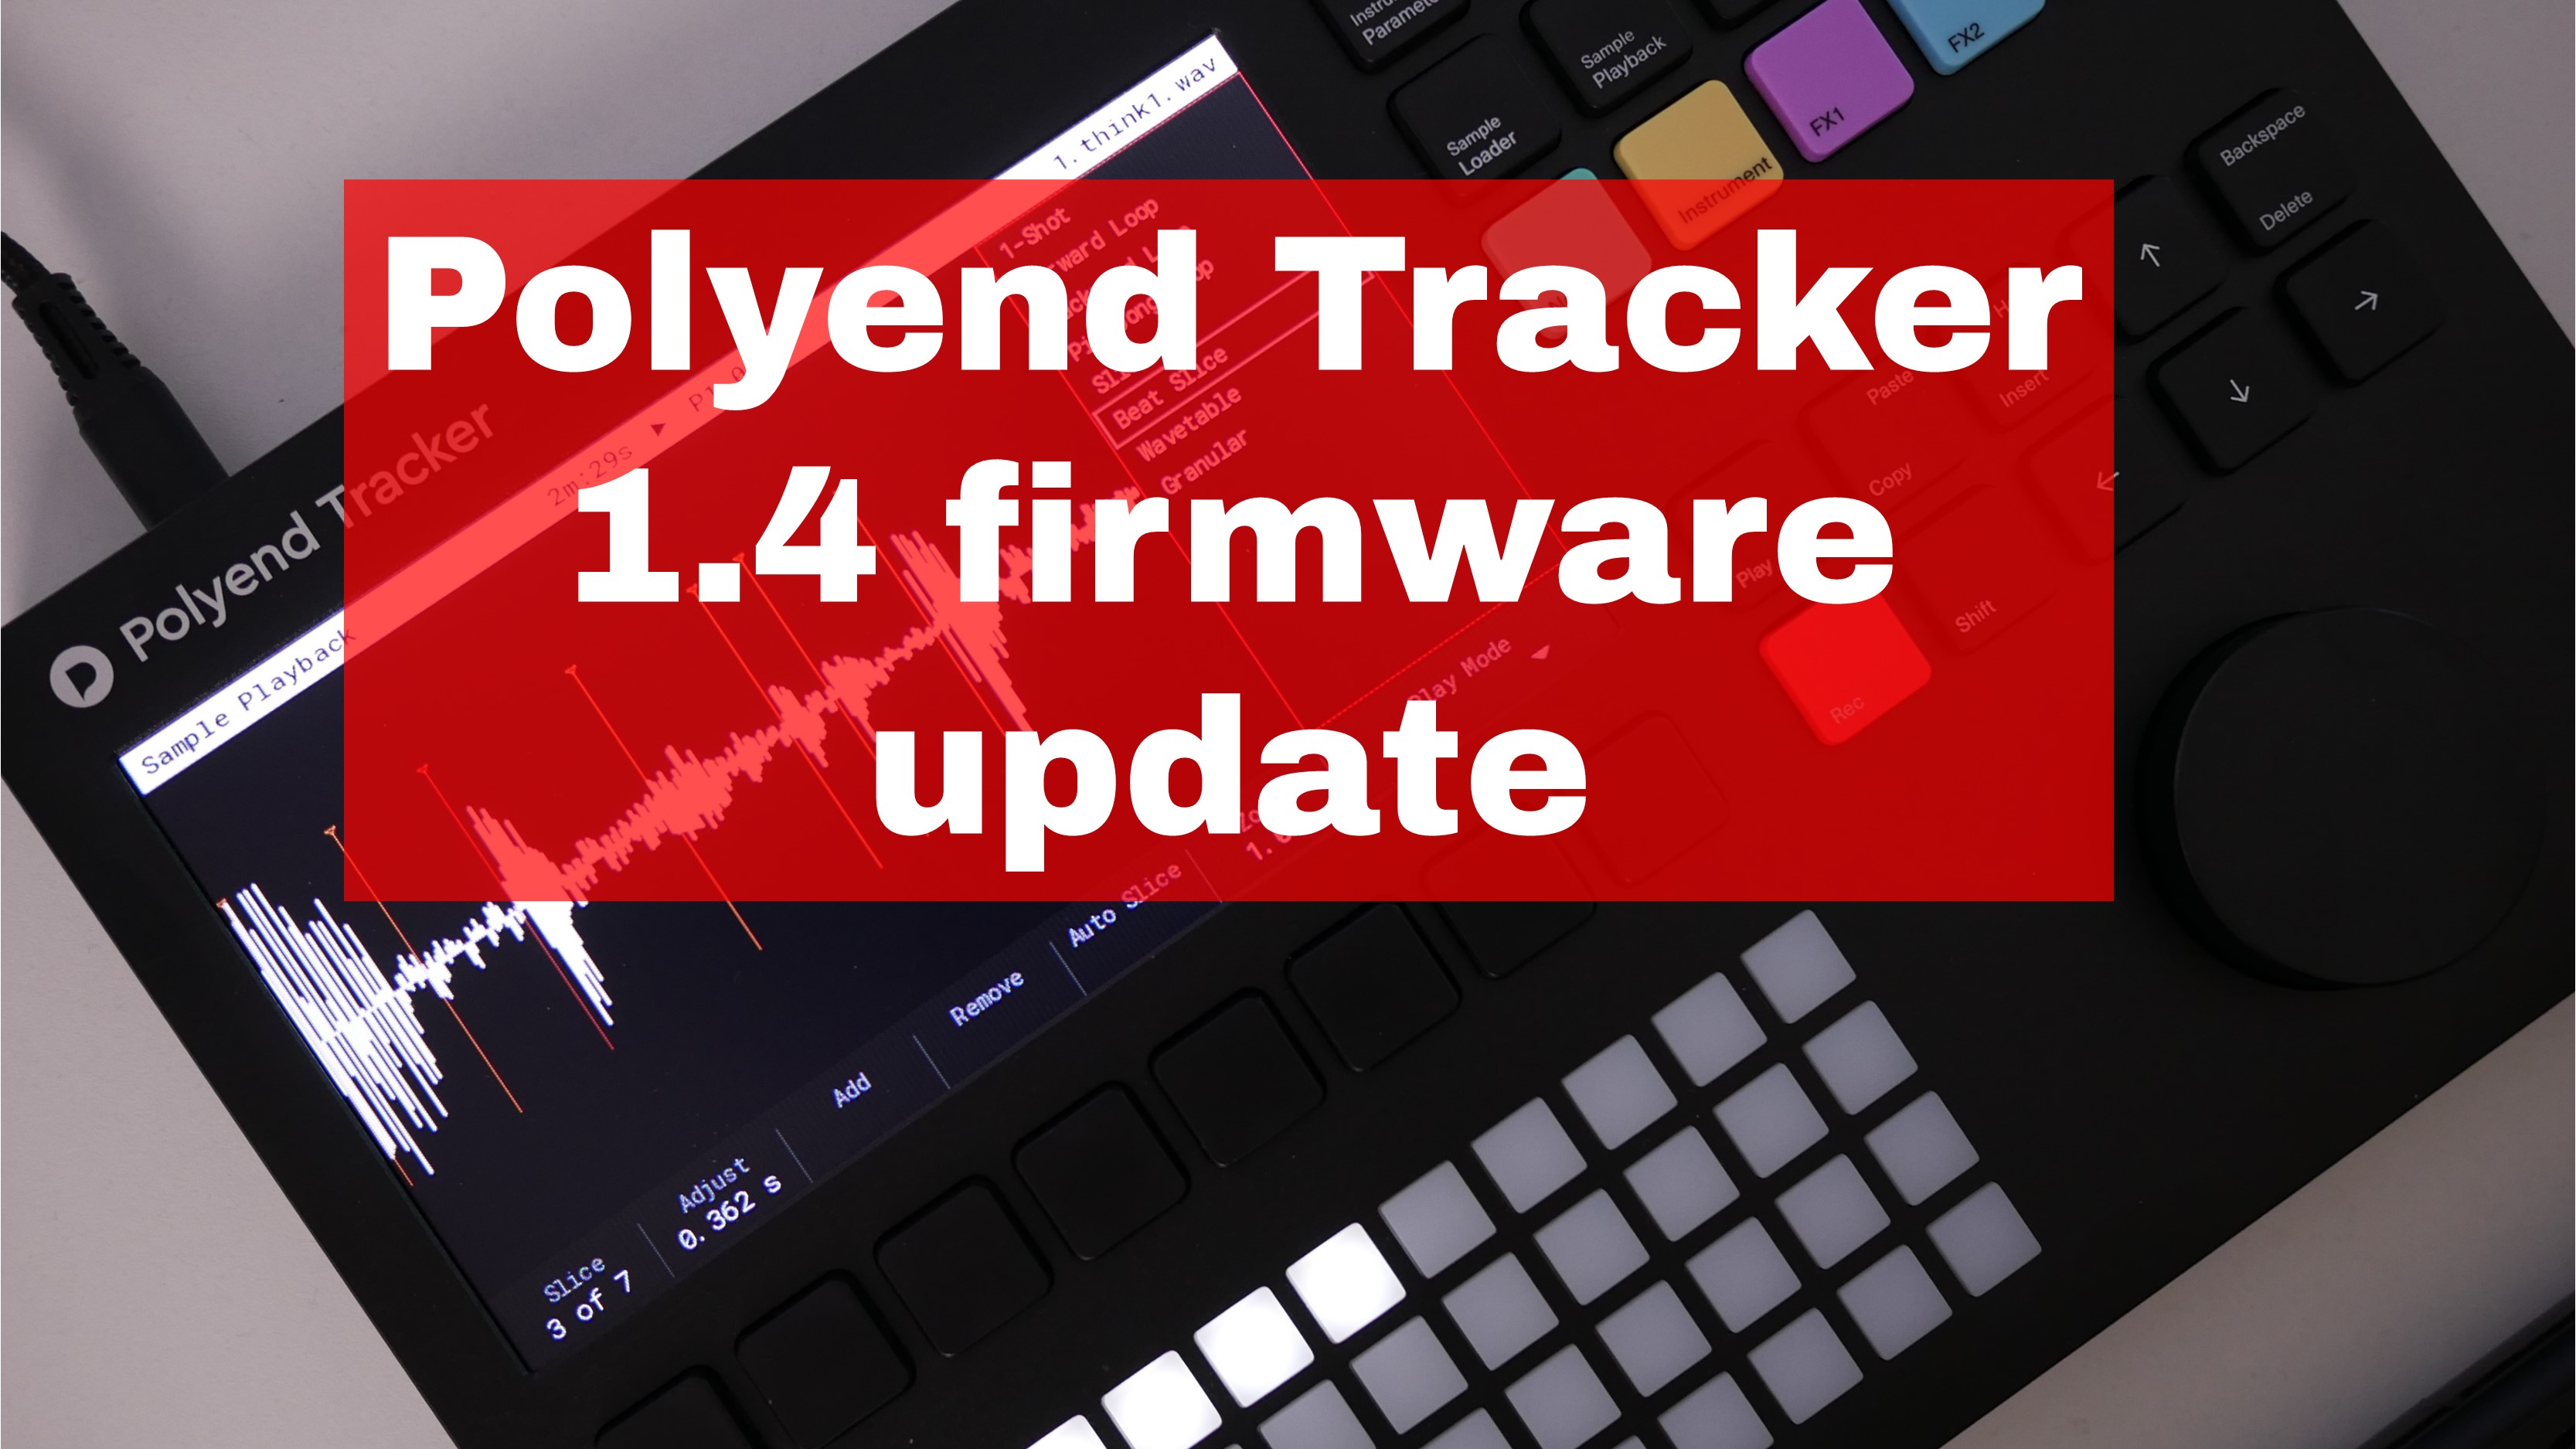 Polyend Tracker - firmware update 1.4